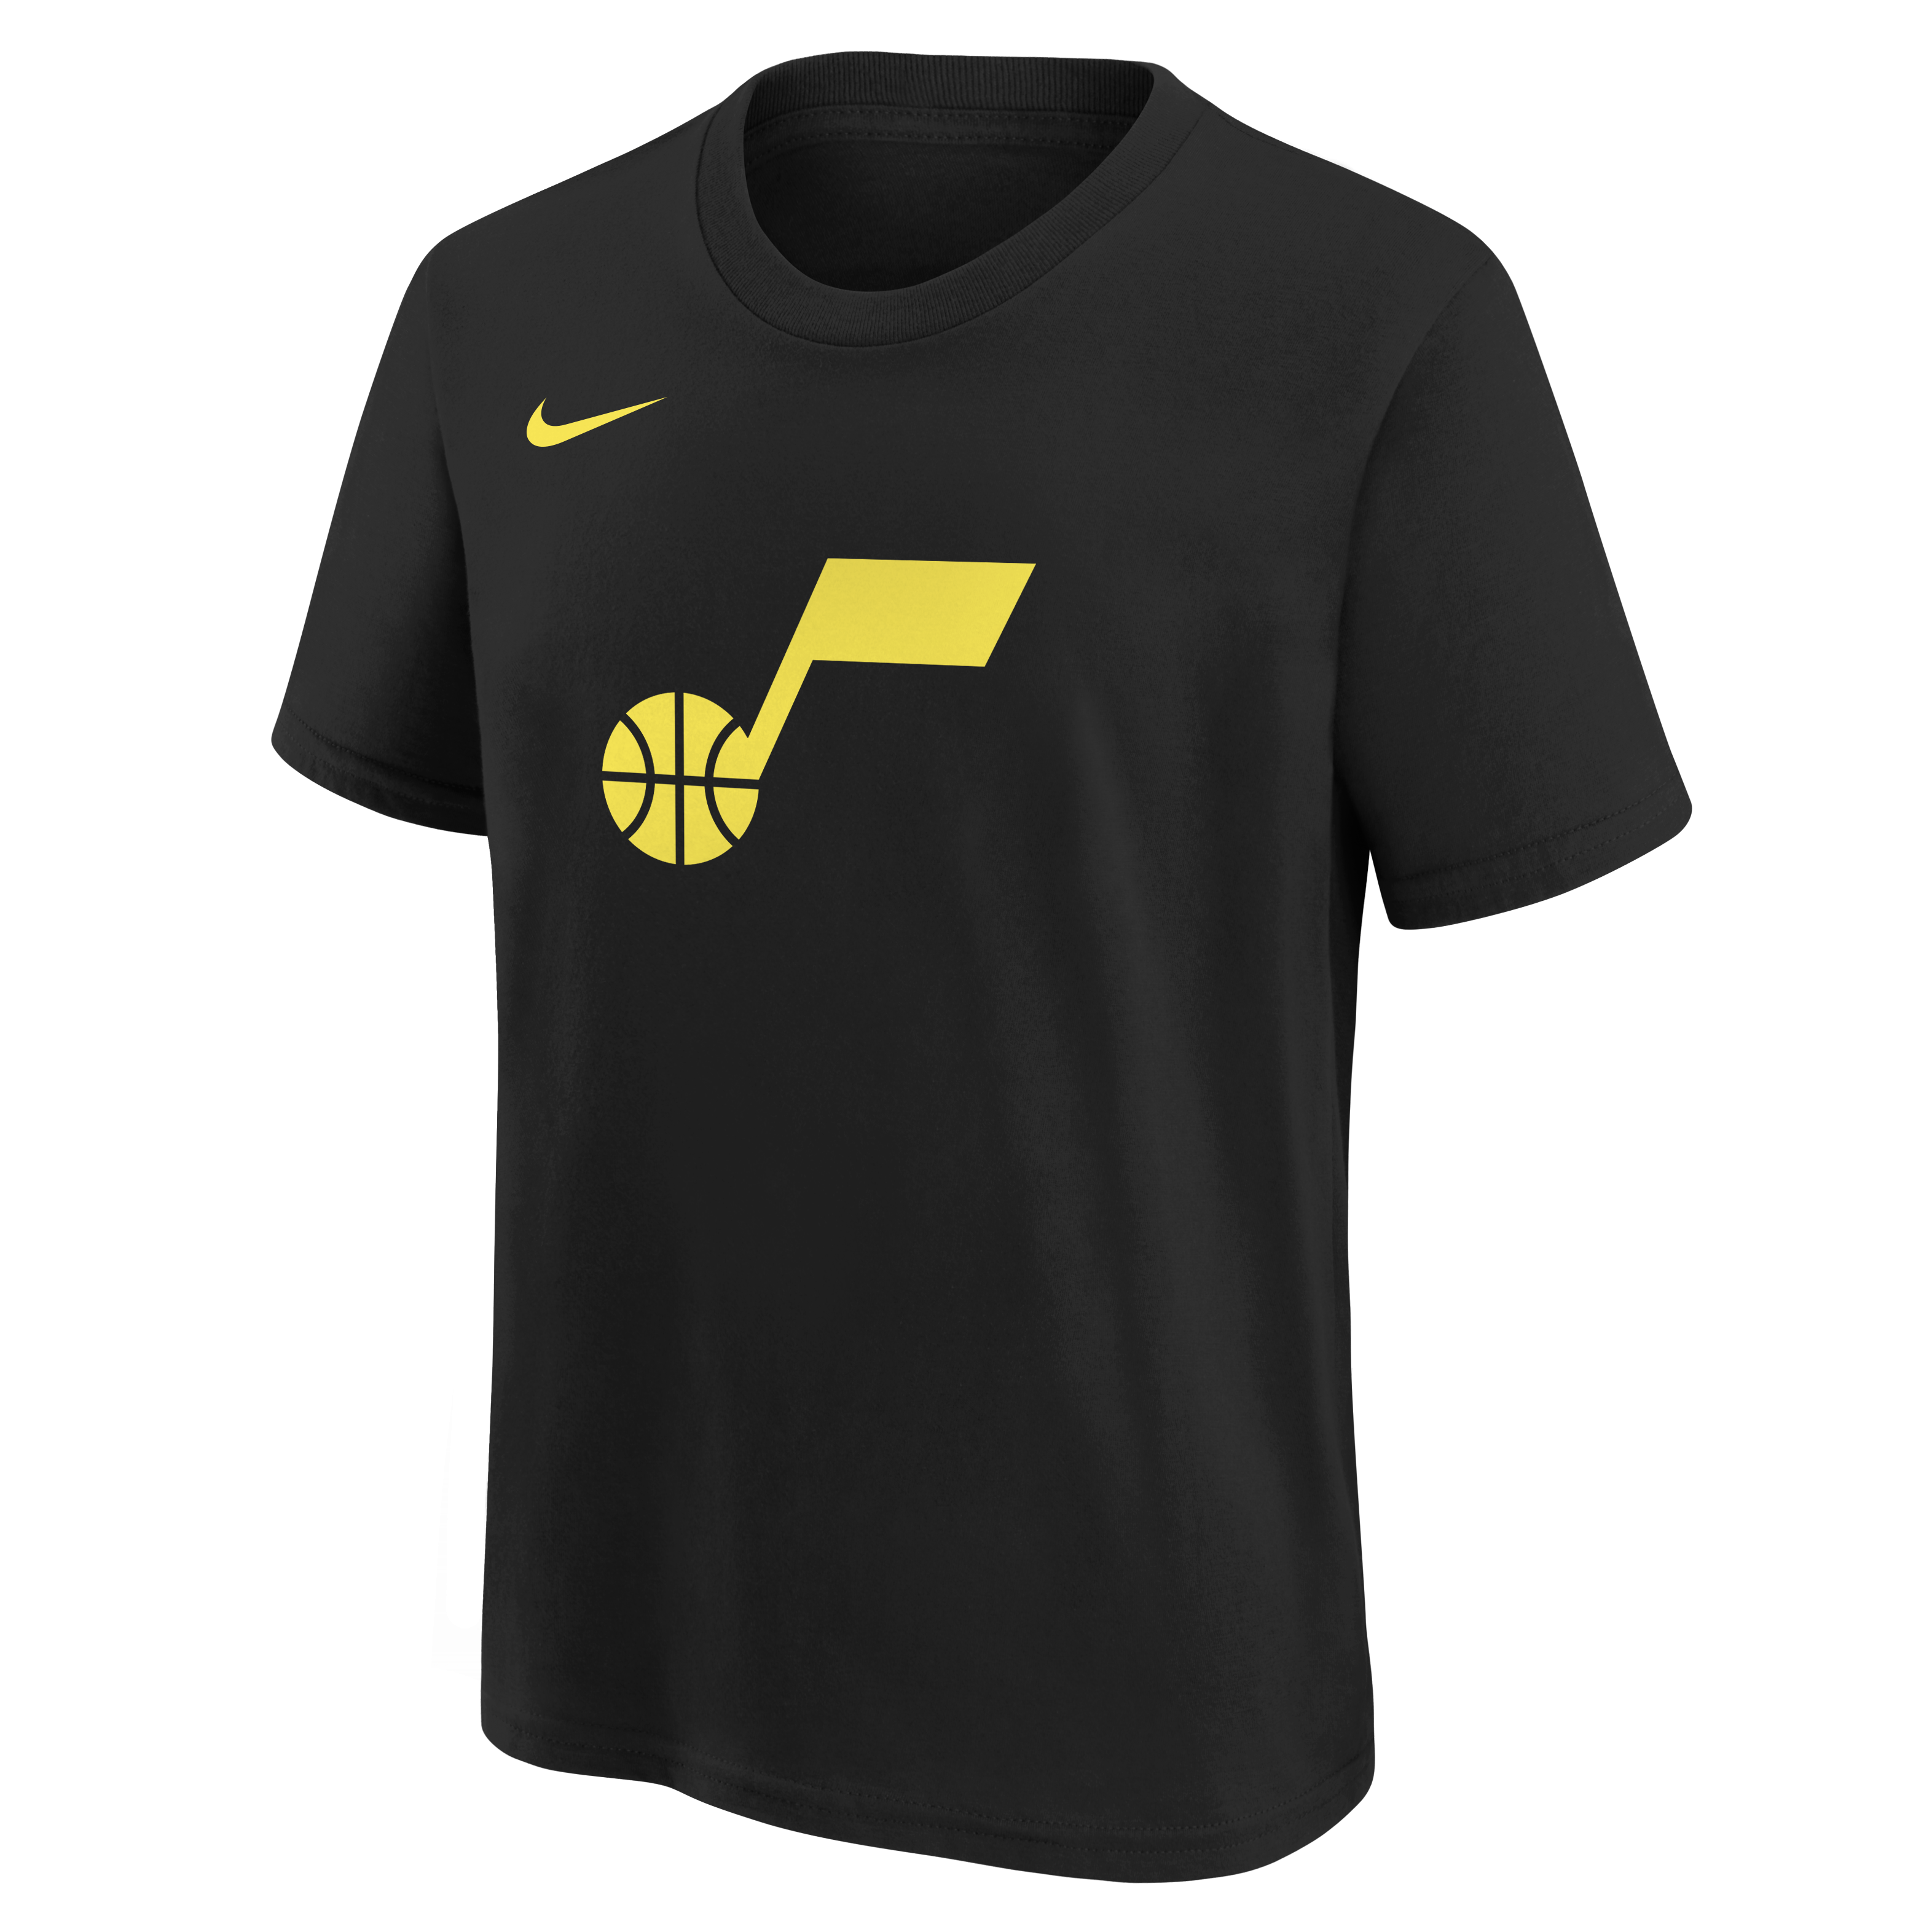 Utah Jazz Team Store on X: Nike Team Store 👀 🔥🔥   / X